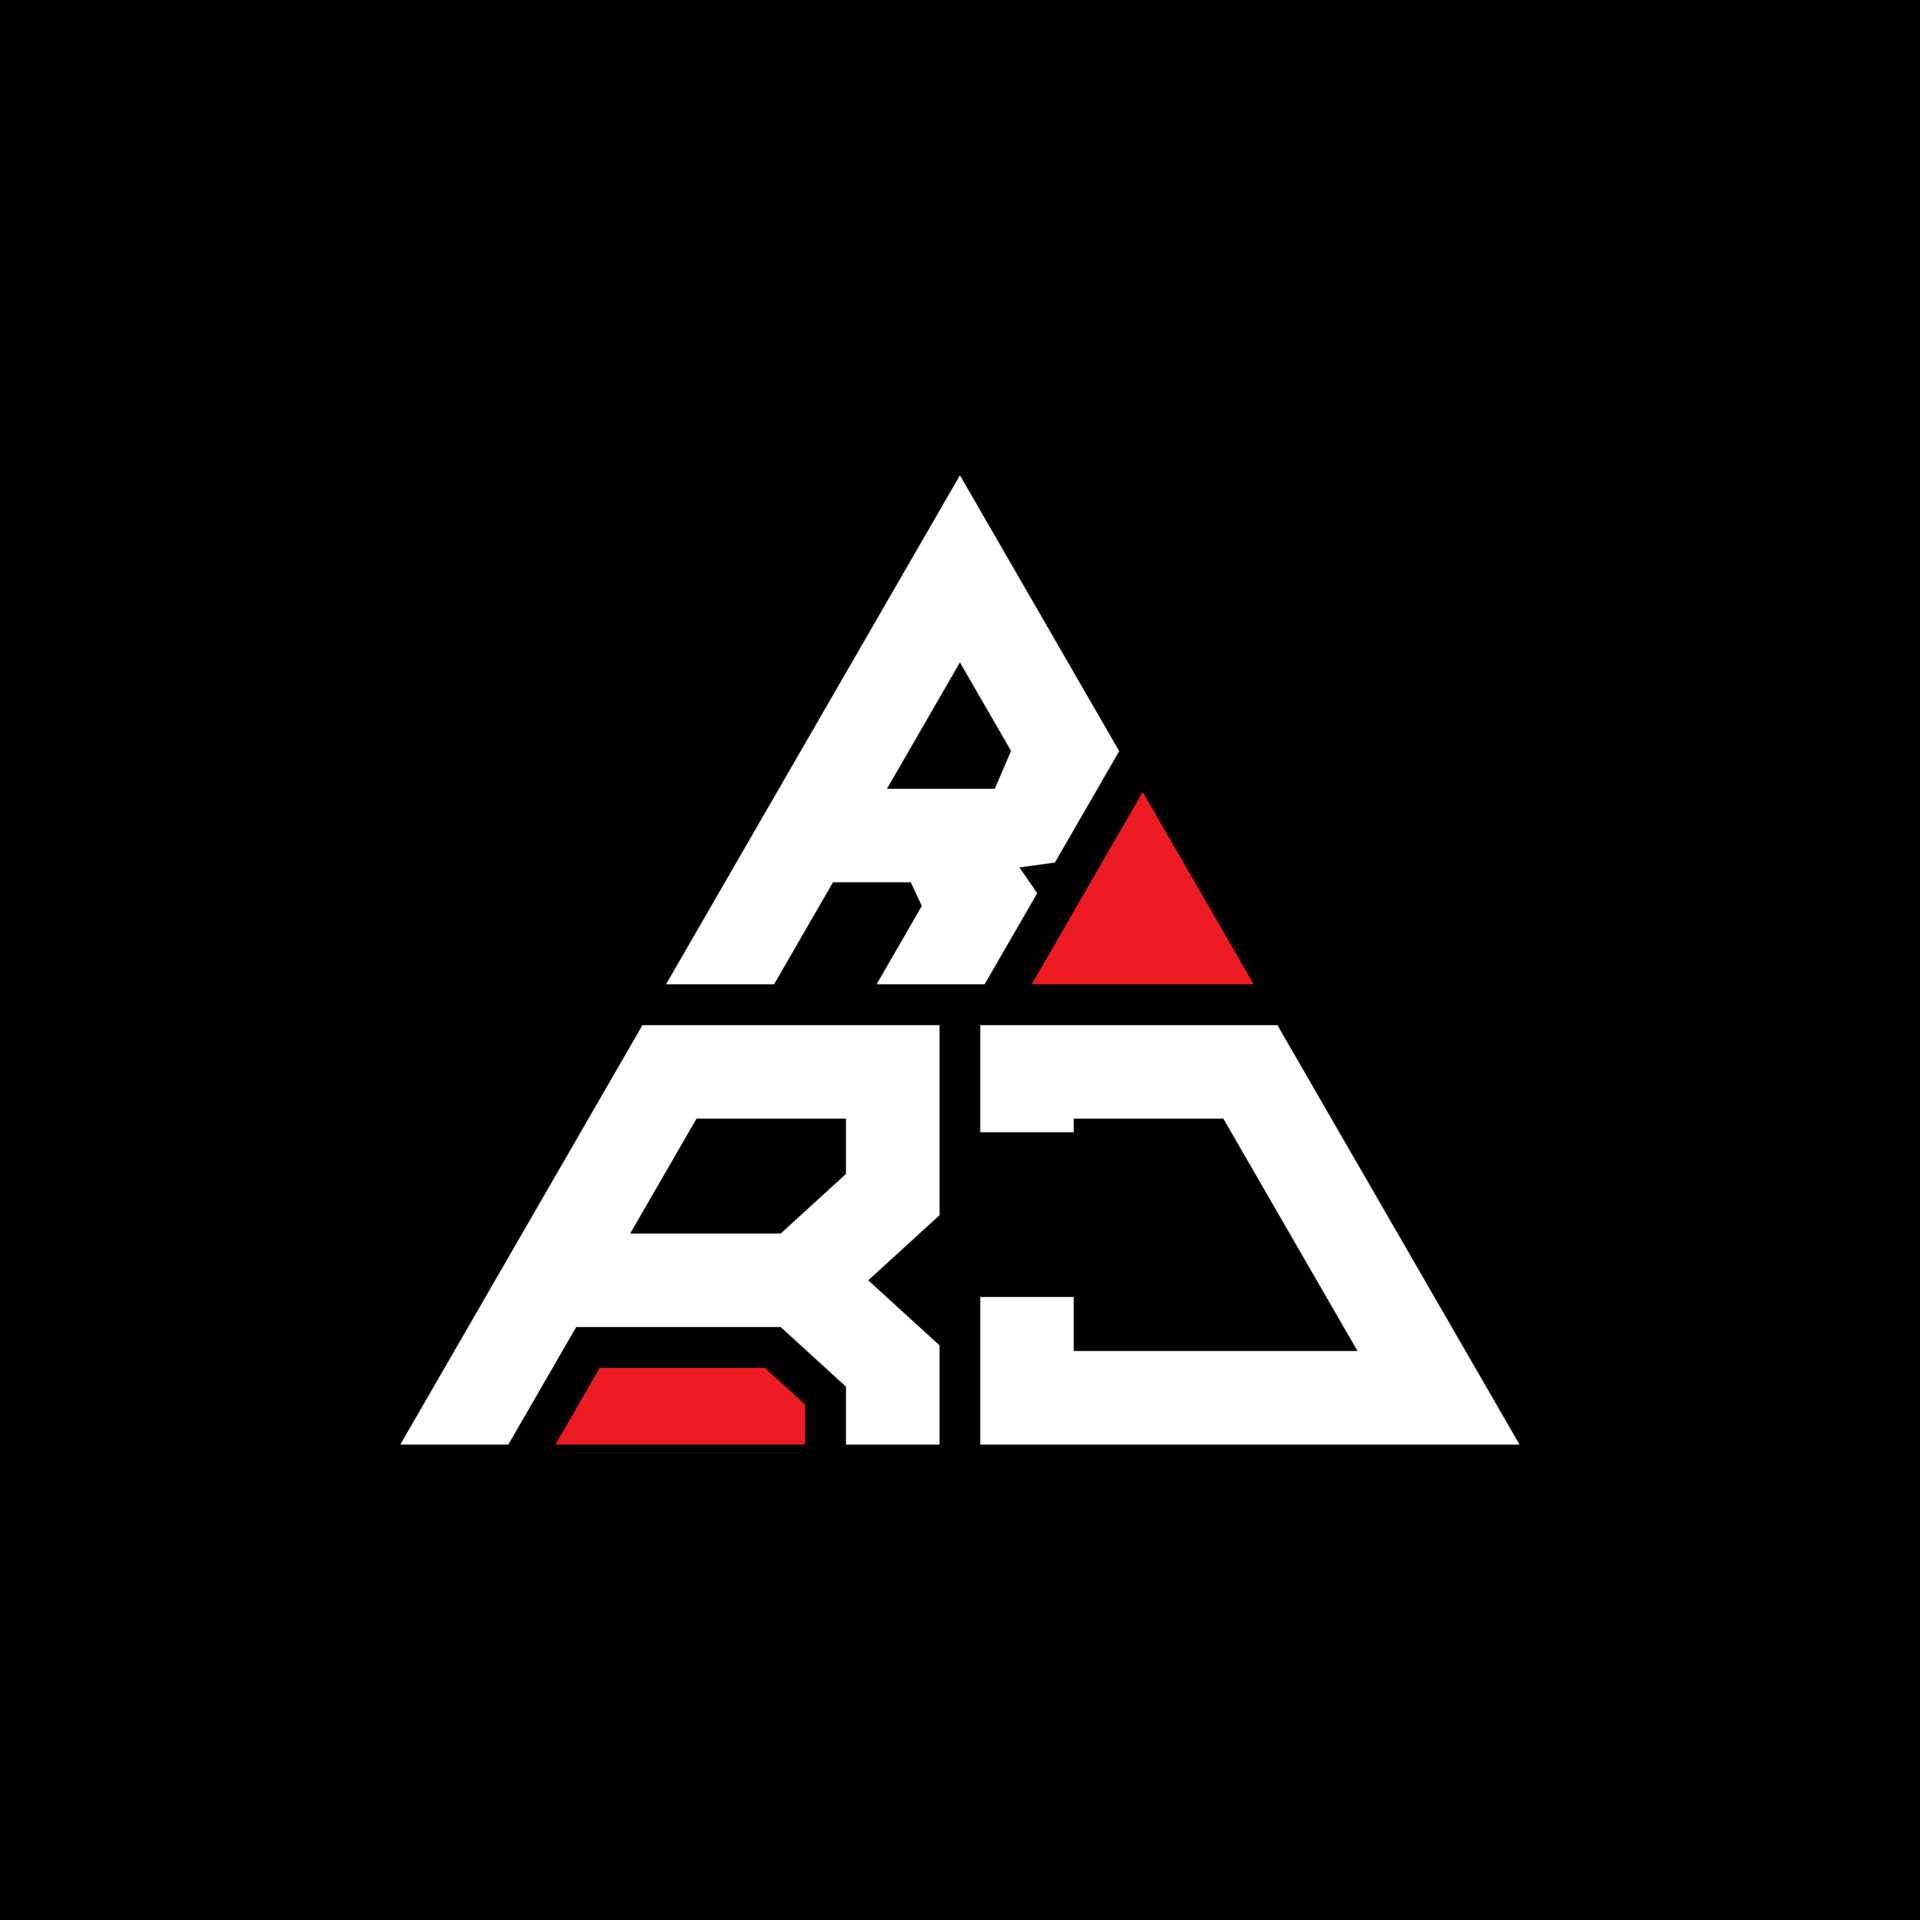 RRJ triangle letter logo design with triangle shape. RRJ triangle logo ...